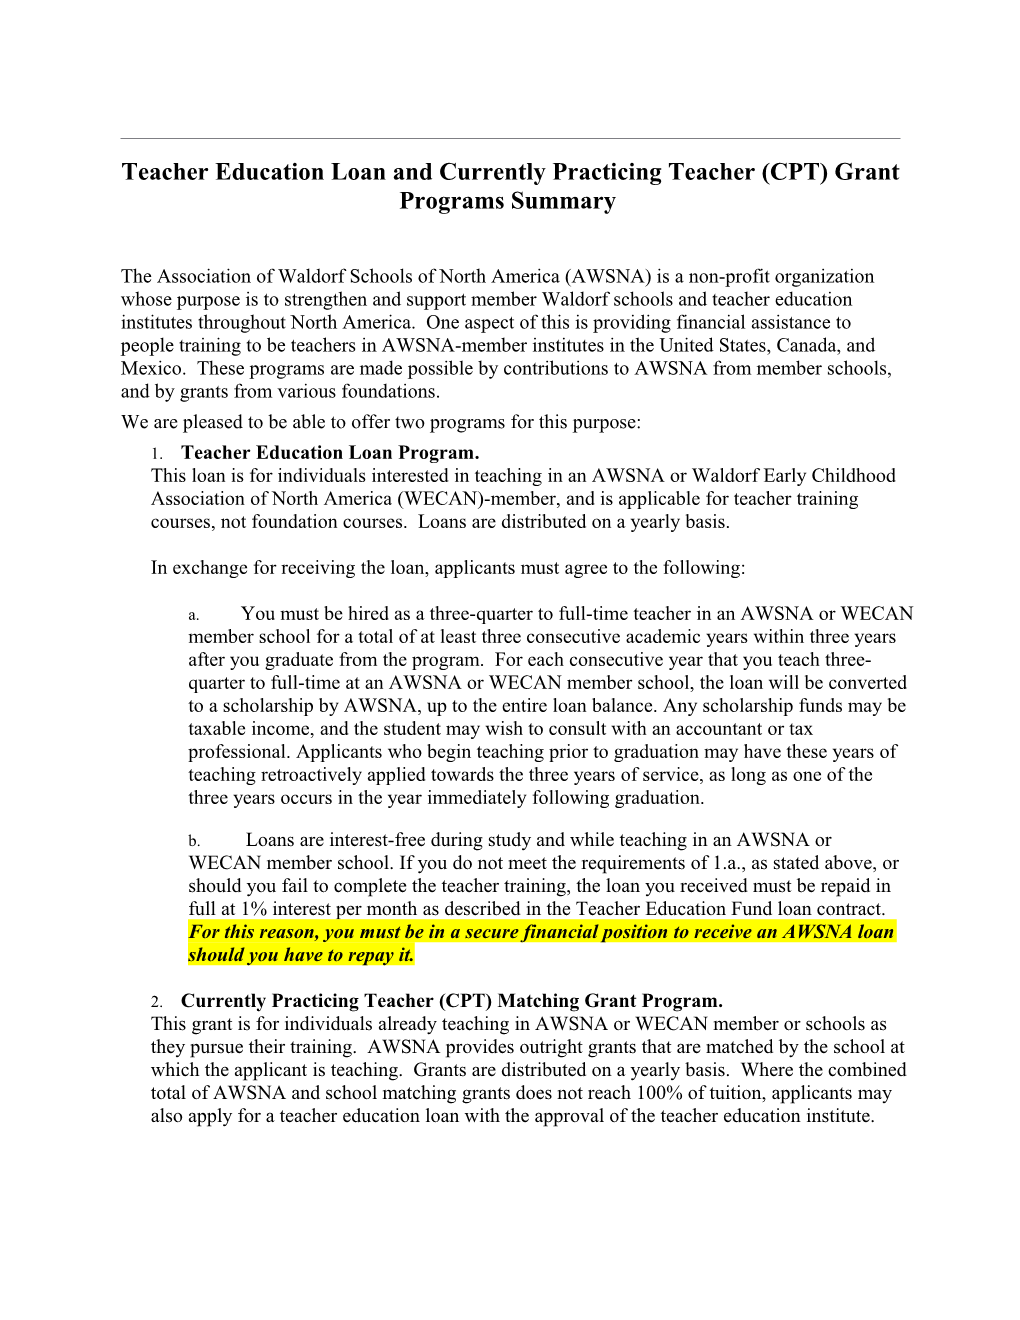 Teacher Education Loan and Currently Practicing Teacher (CPT) Grant Programs Summary